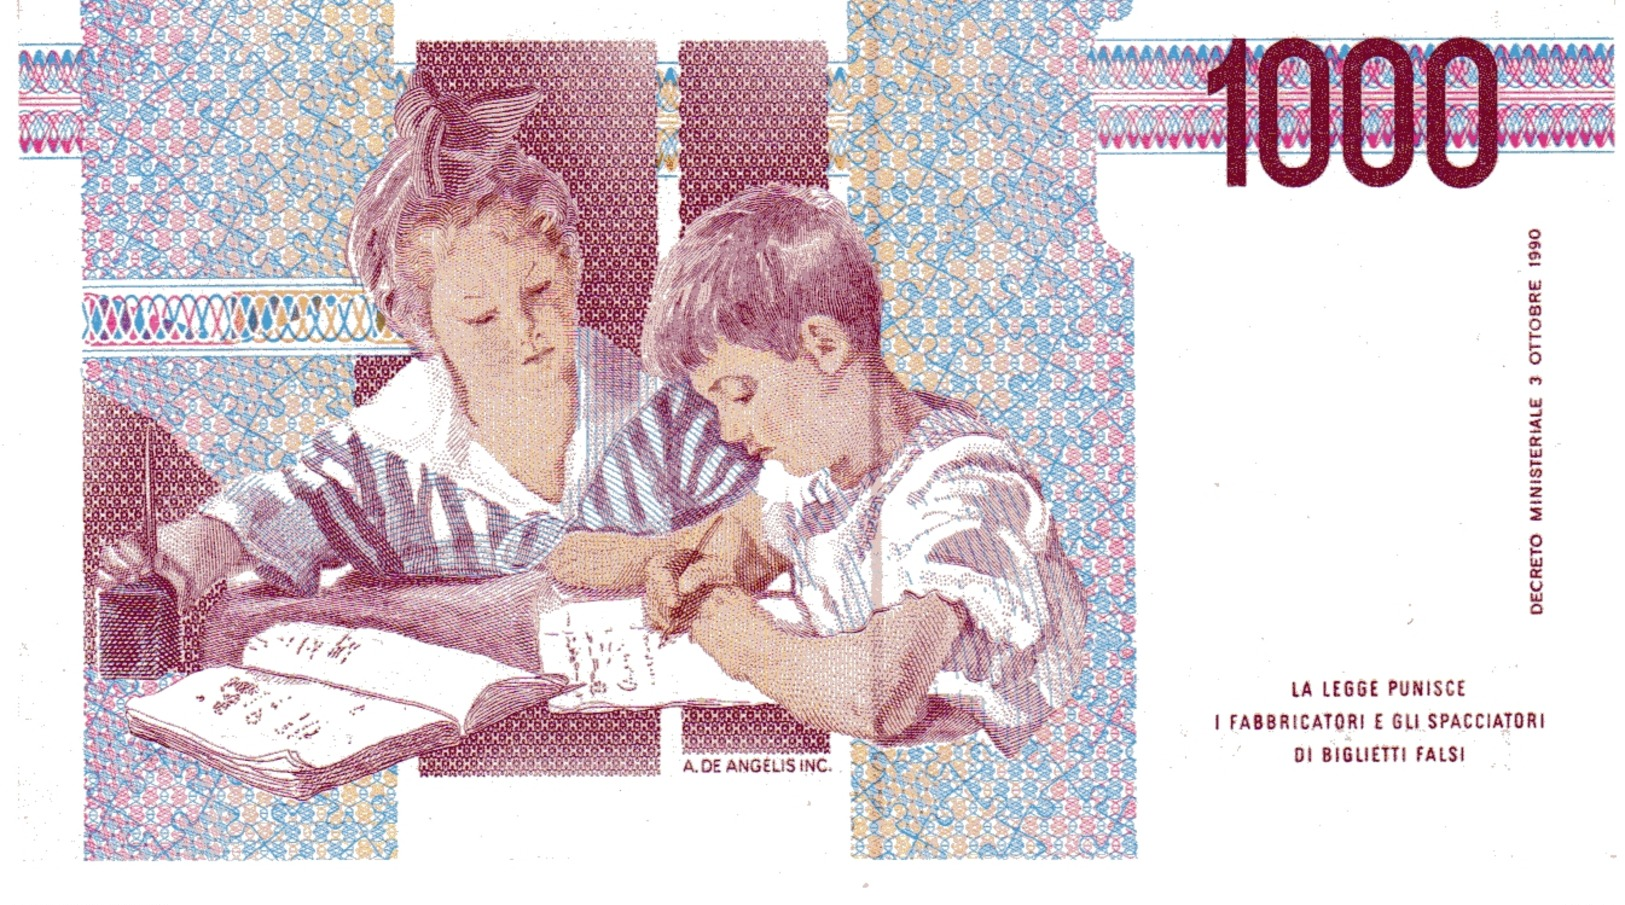 1000-Lire Banknote NEU - UNBENÜTZT - 1000 Lire